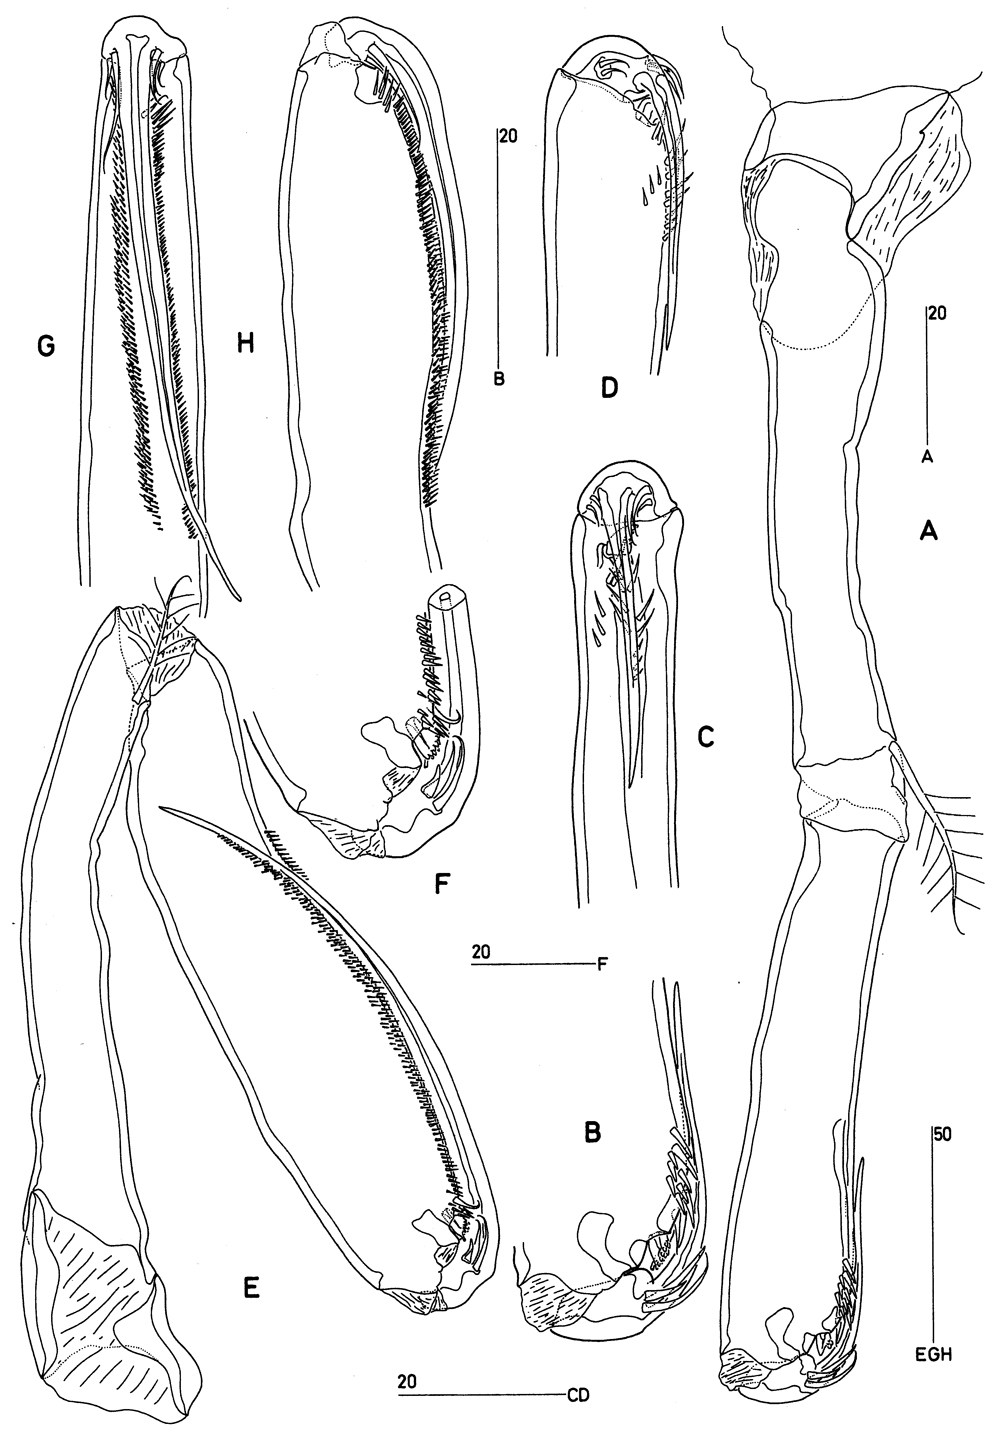 Species Goniopsyllus clausi - Plate 4 of morphological figures